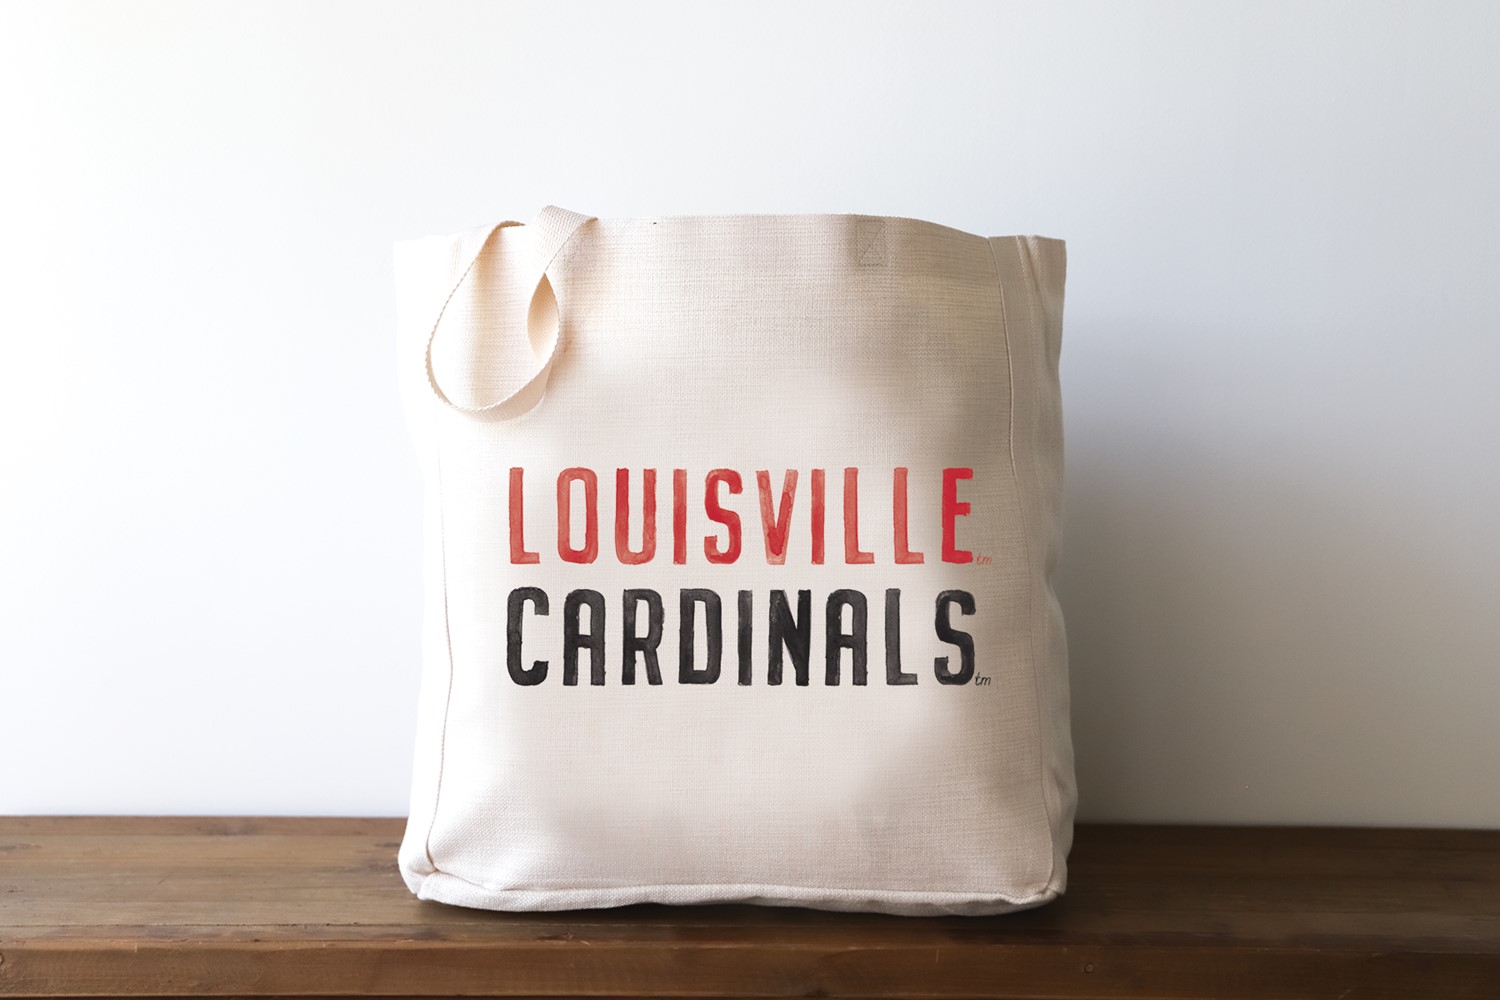 Louisville Cardinals Fabric 